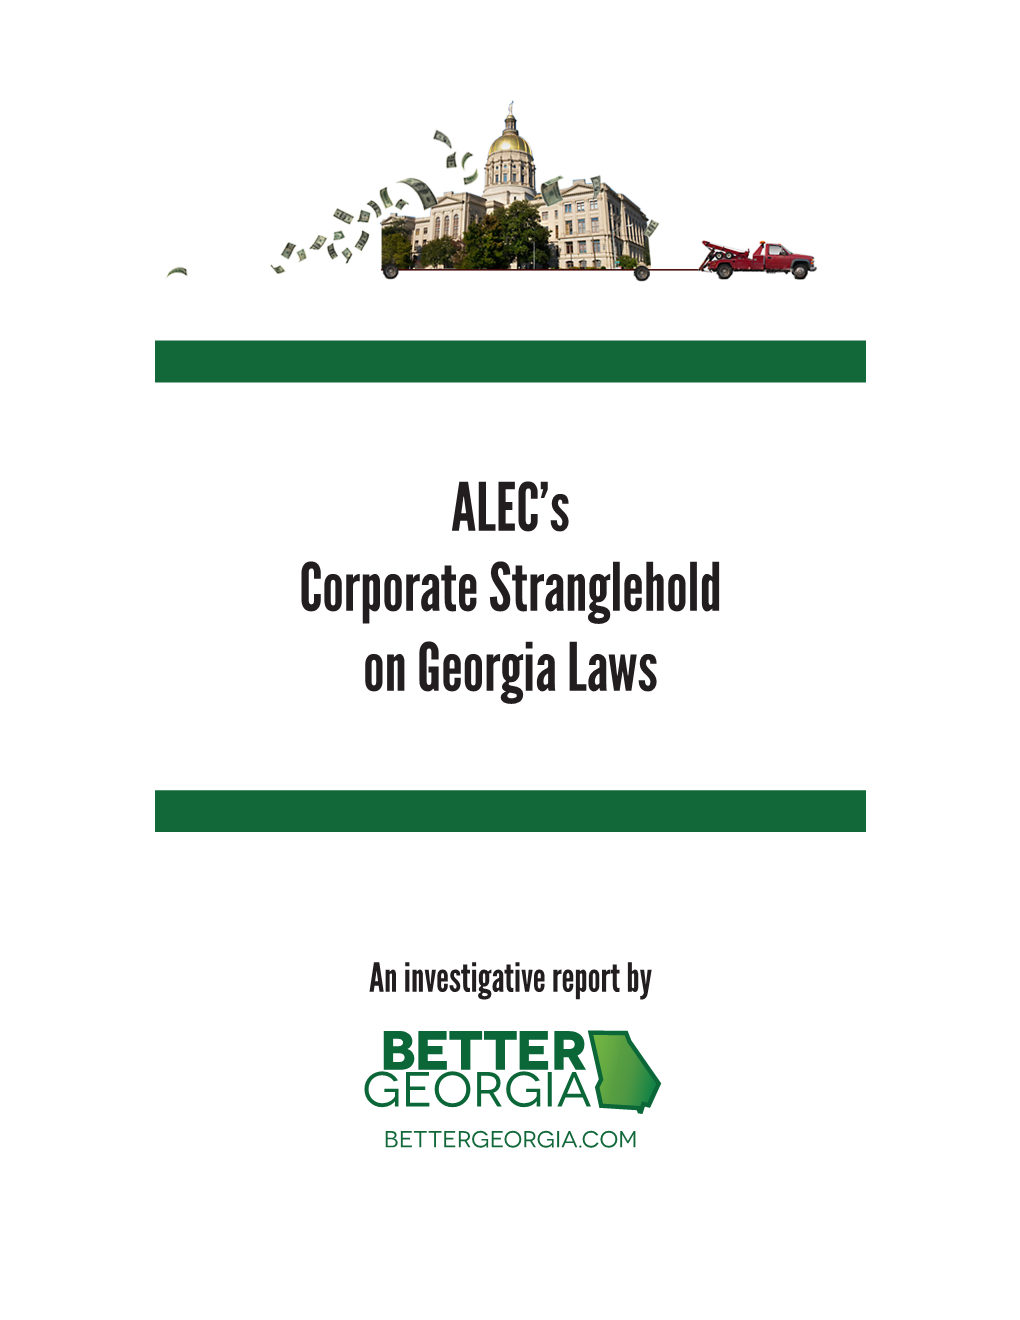 ALEC's Corporate Stranglehold on Georgia Laws